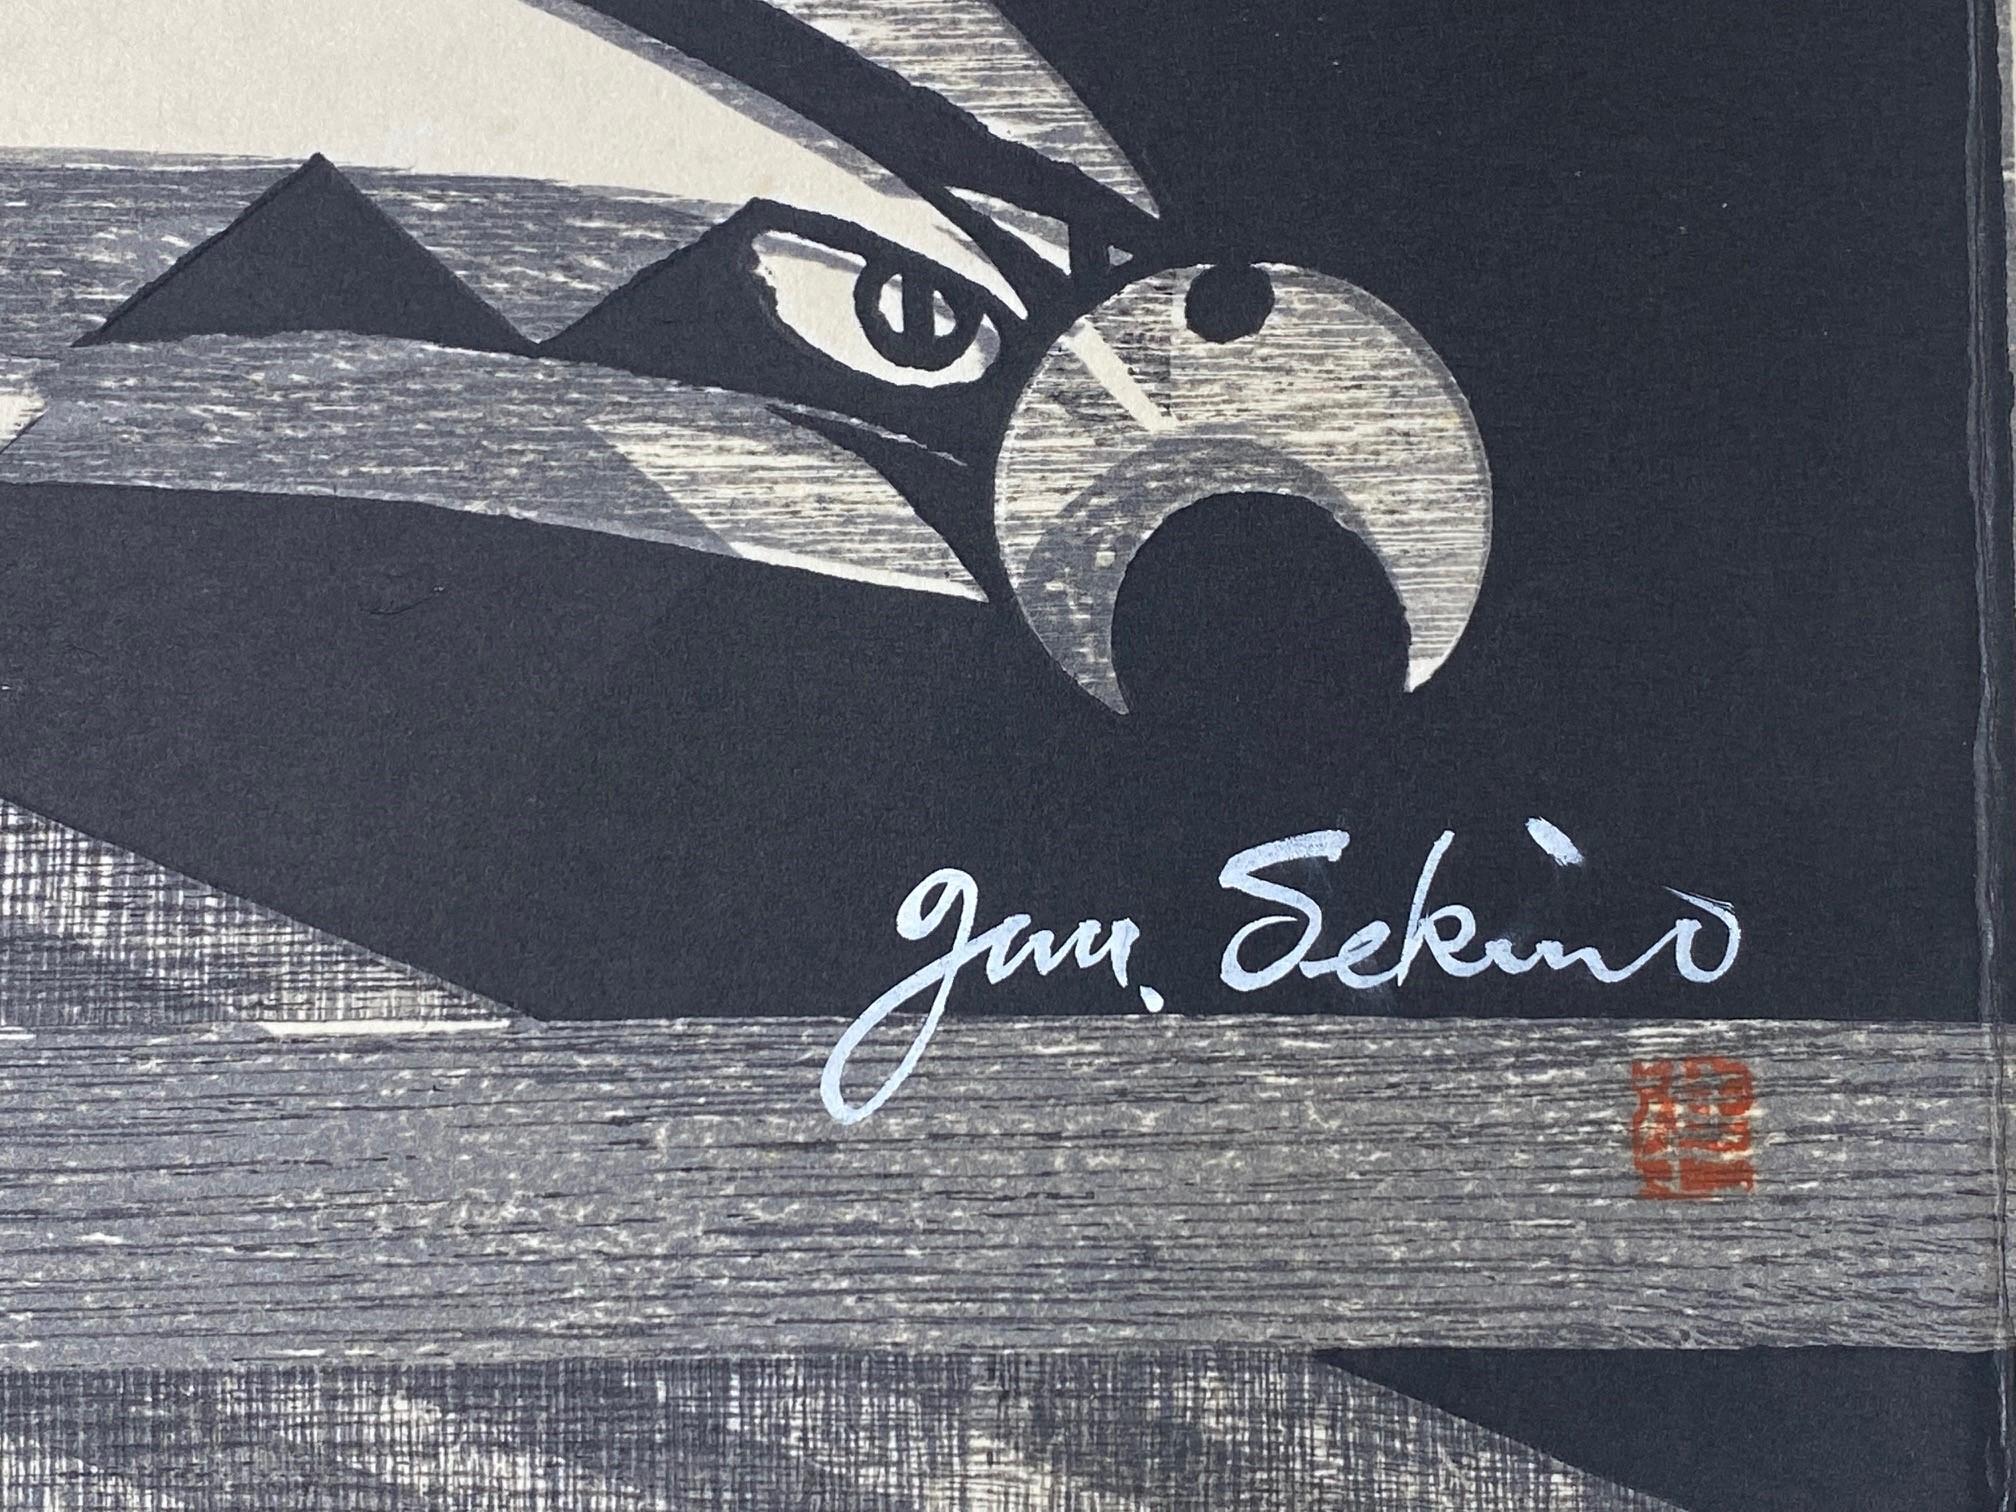 Paper Junichiro Sekino Signed Limited Edition Japanese Woodblock Print of Eagle Hawk For Sale